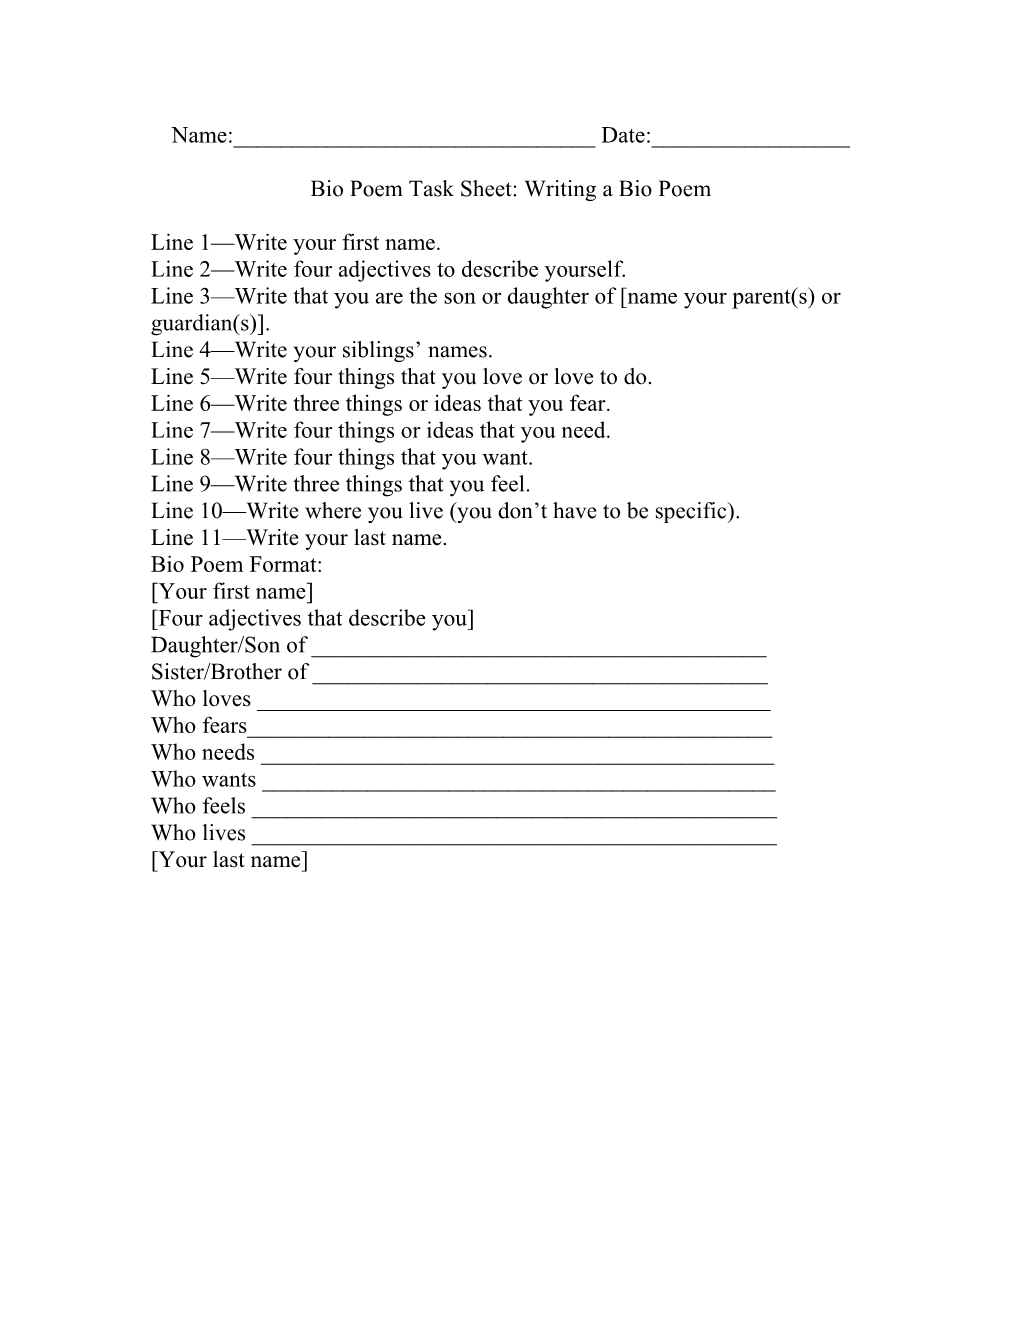 Bio Poem Task Sheet: Writing a Bio Poem